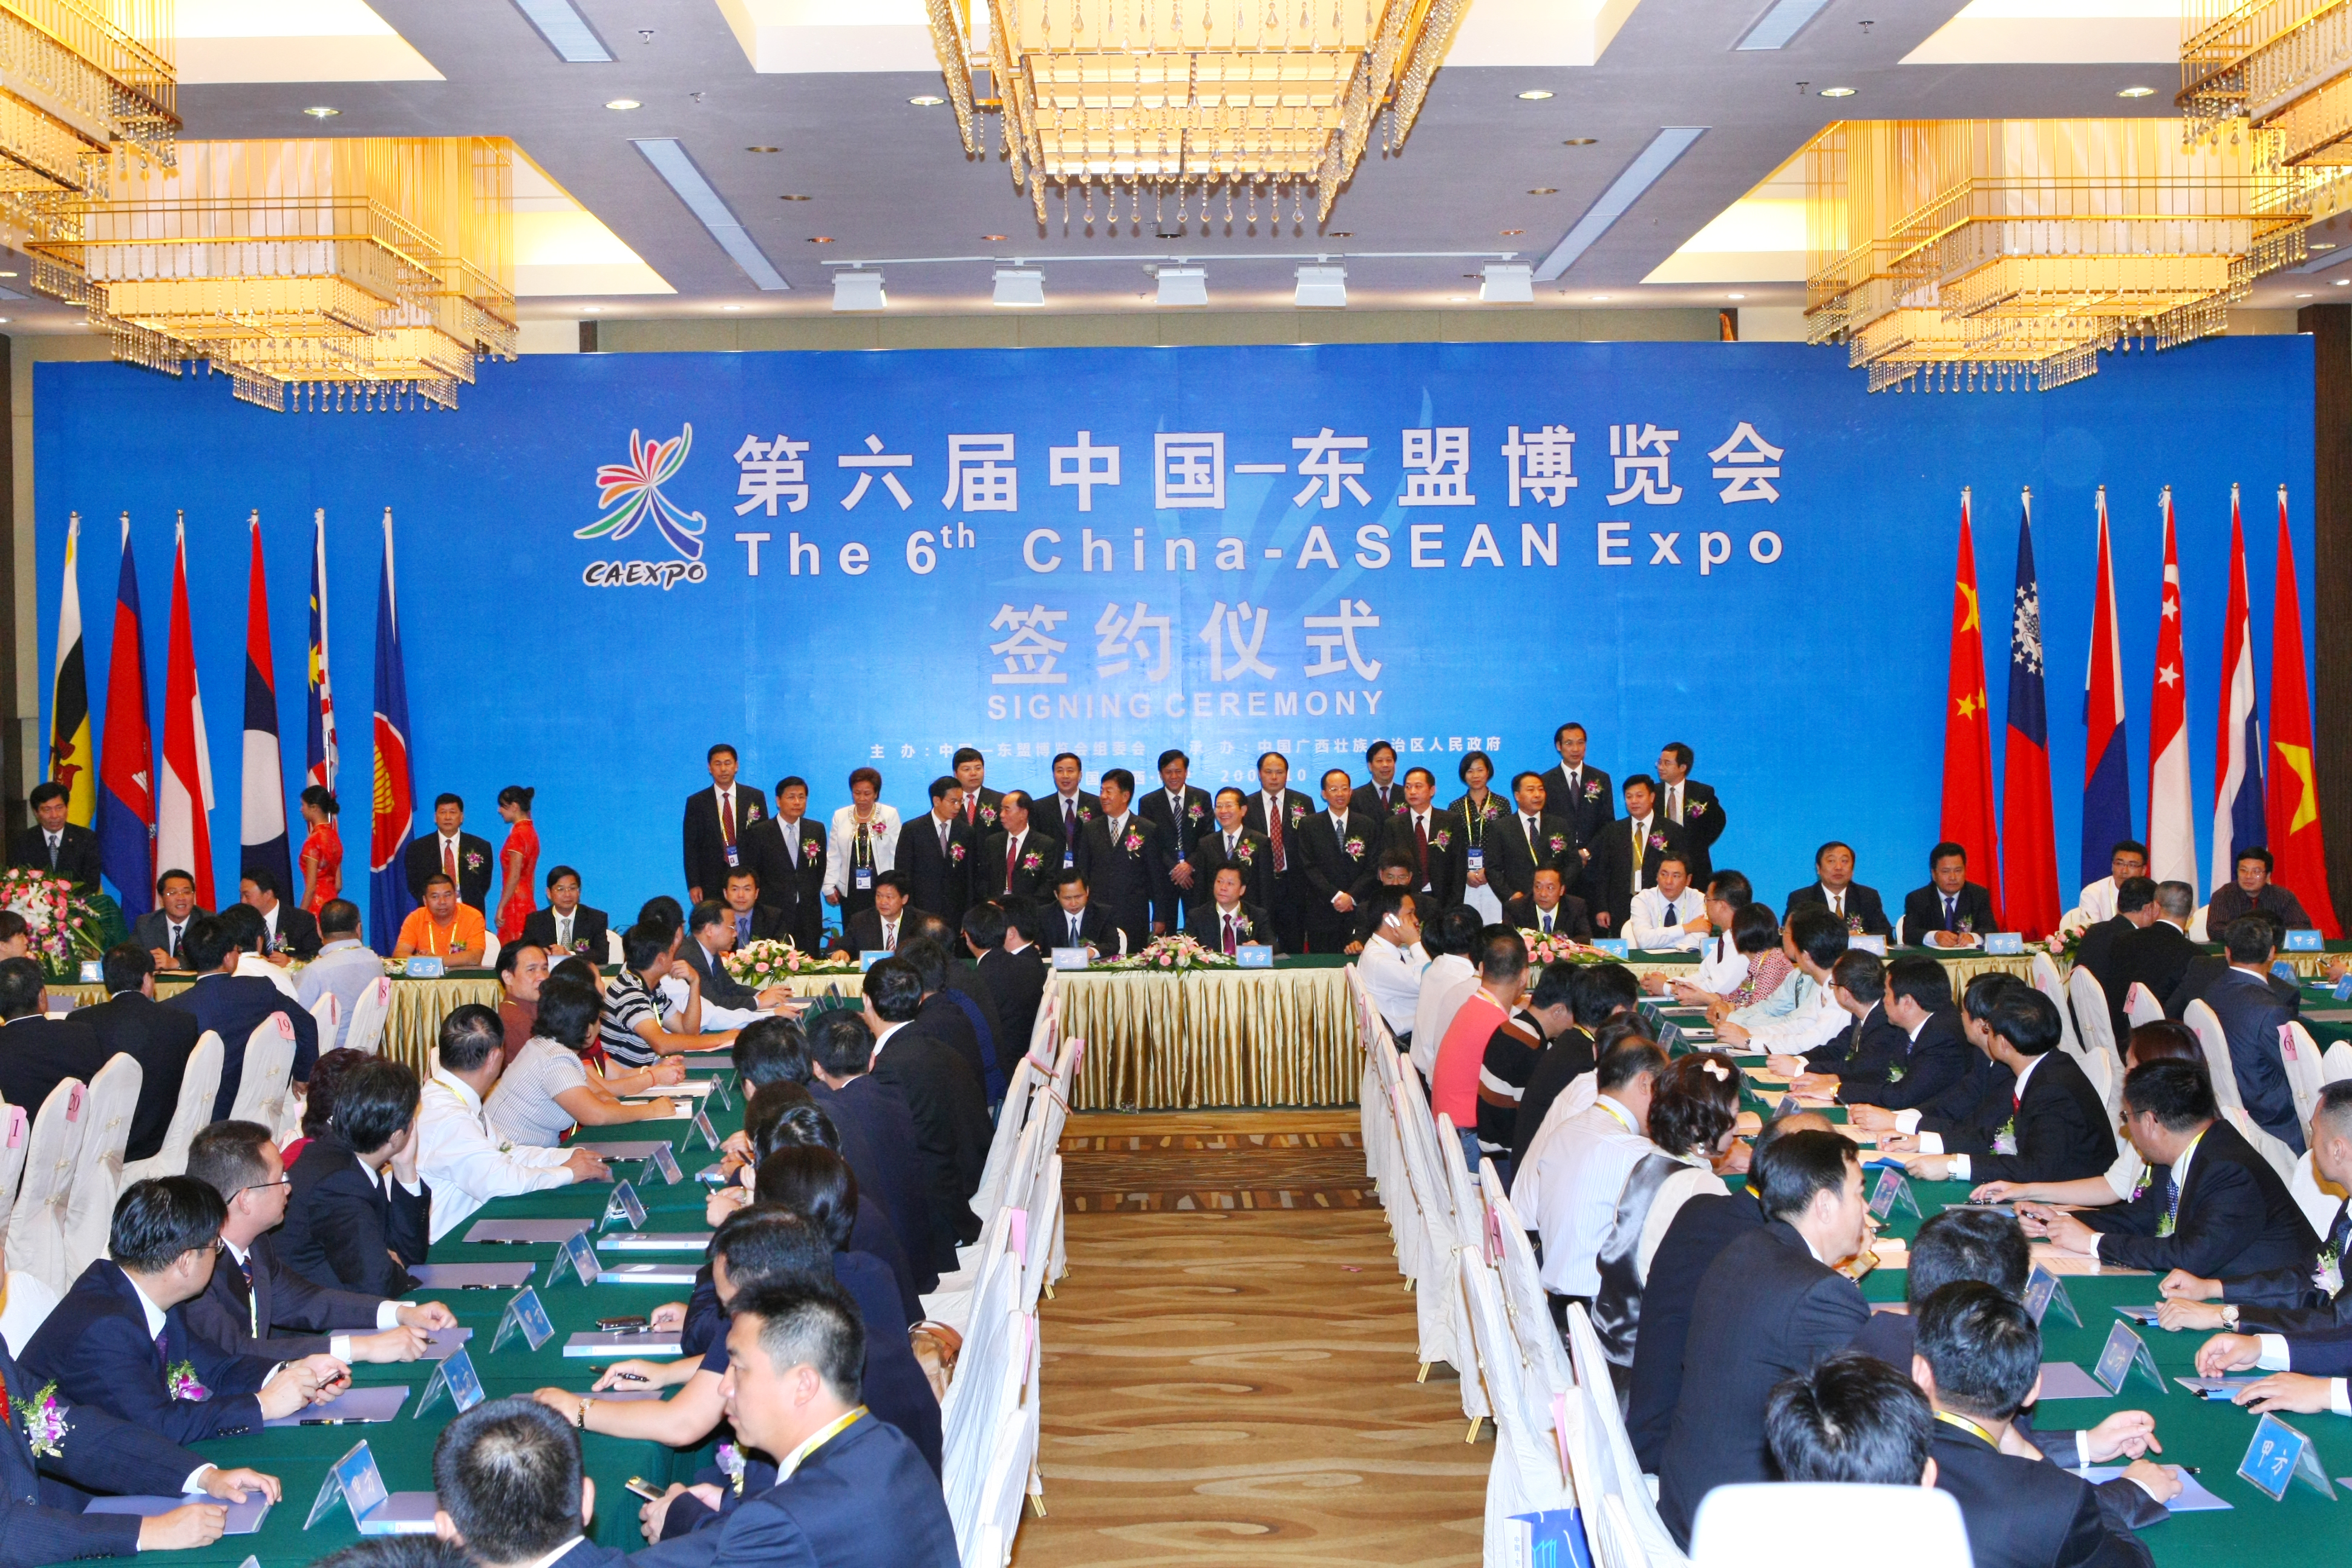 The sixth China-ASEAN Expo